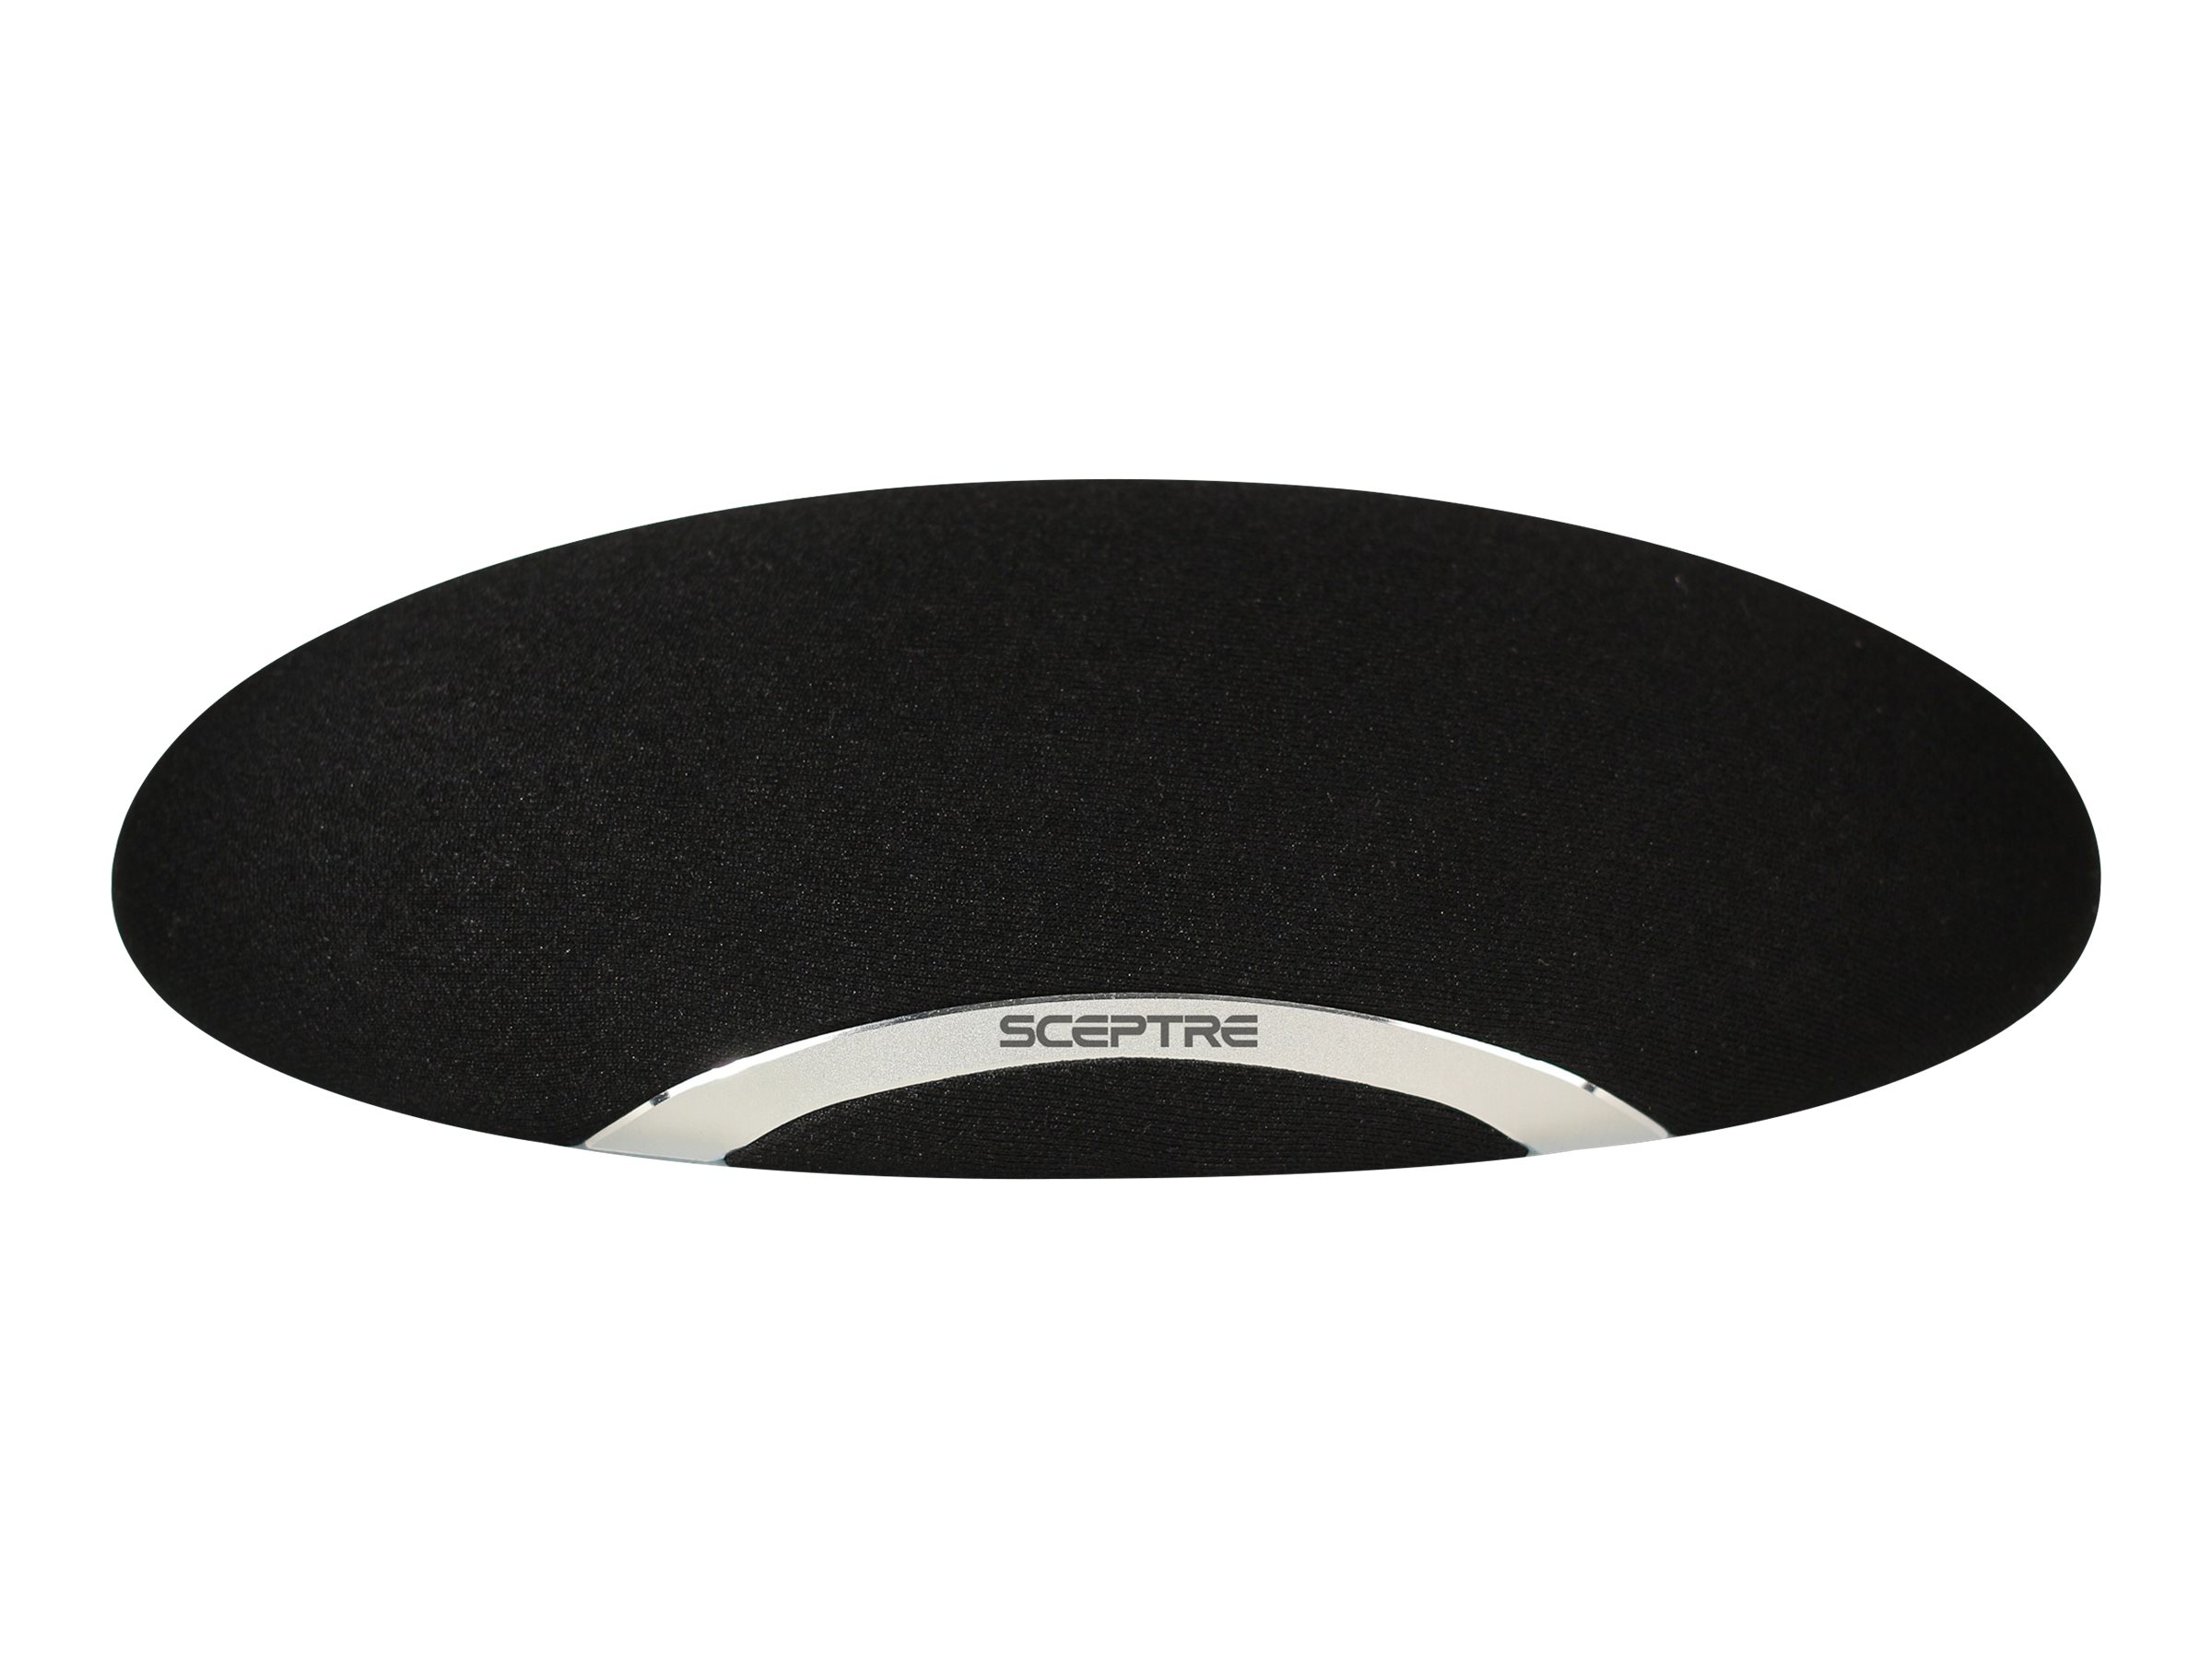 Sceptre Sound Pal Portable Bluetooth Speaker, Blue, SP05032L - image 1 of 5